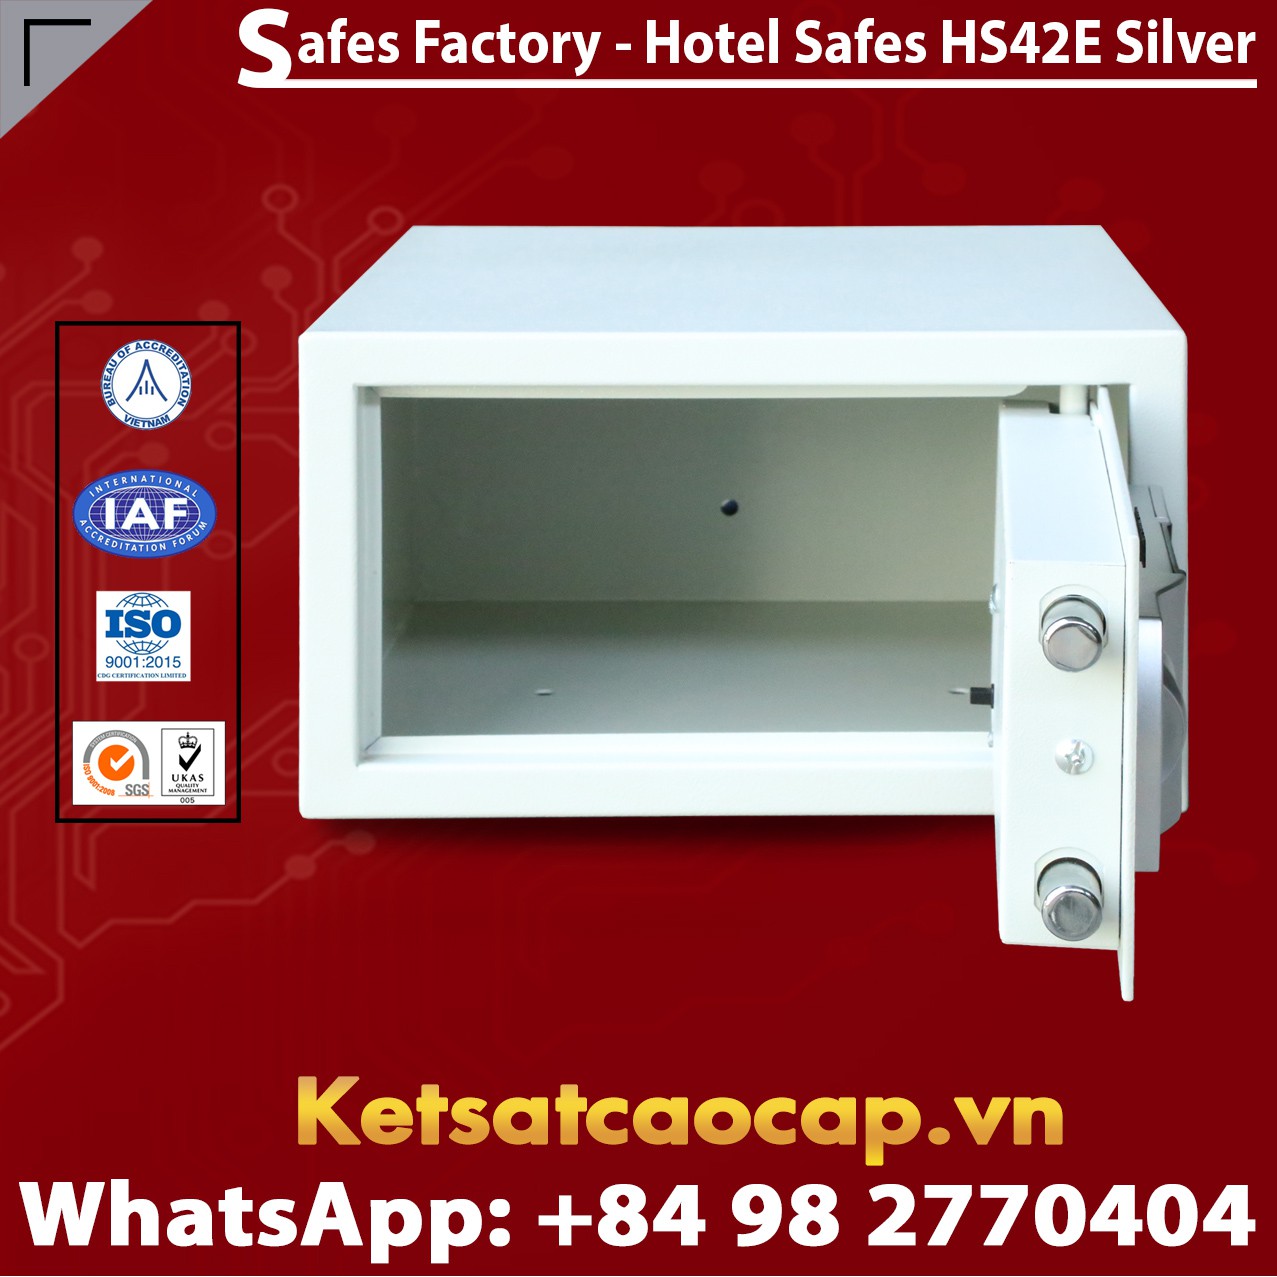 Hotel Safety Deposit Box HOMESUN HS42 E Silver